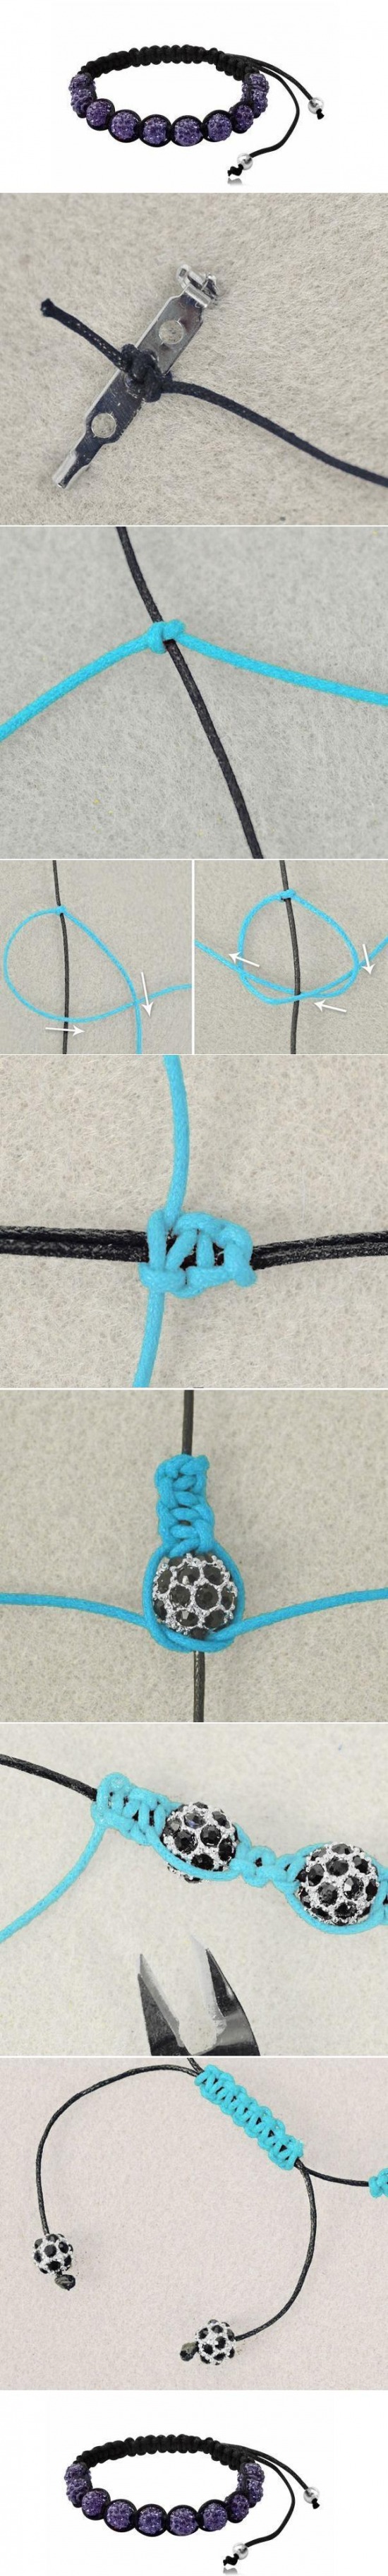 DIY-Quick-Weave-Bracelet.jpg